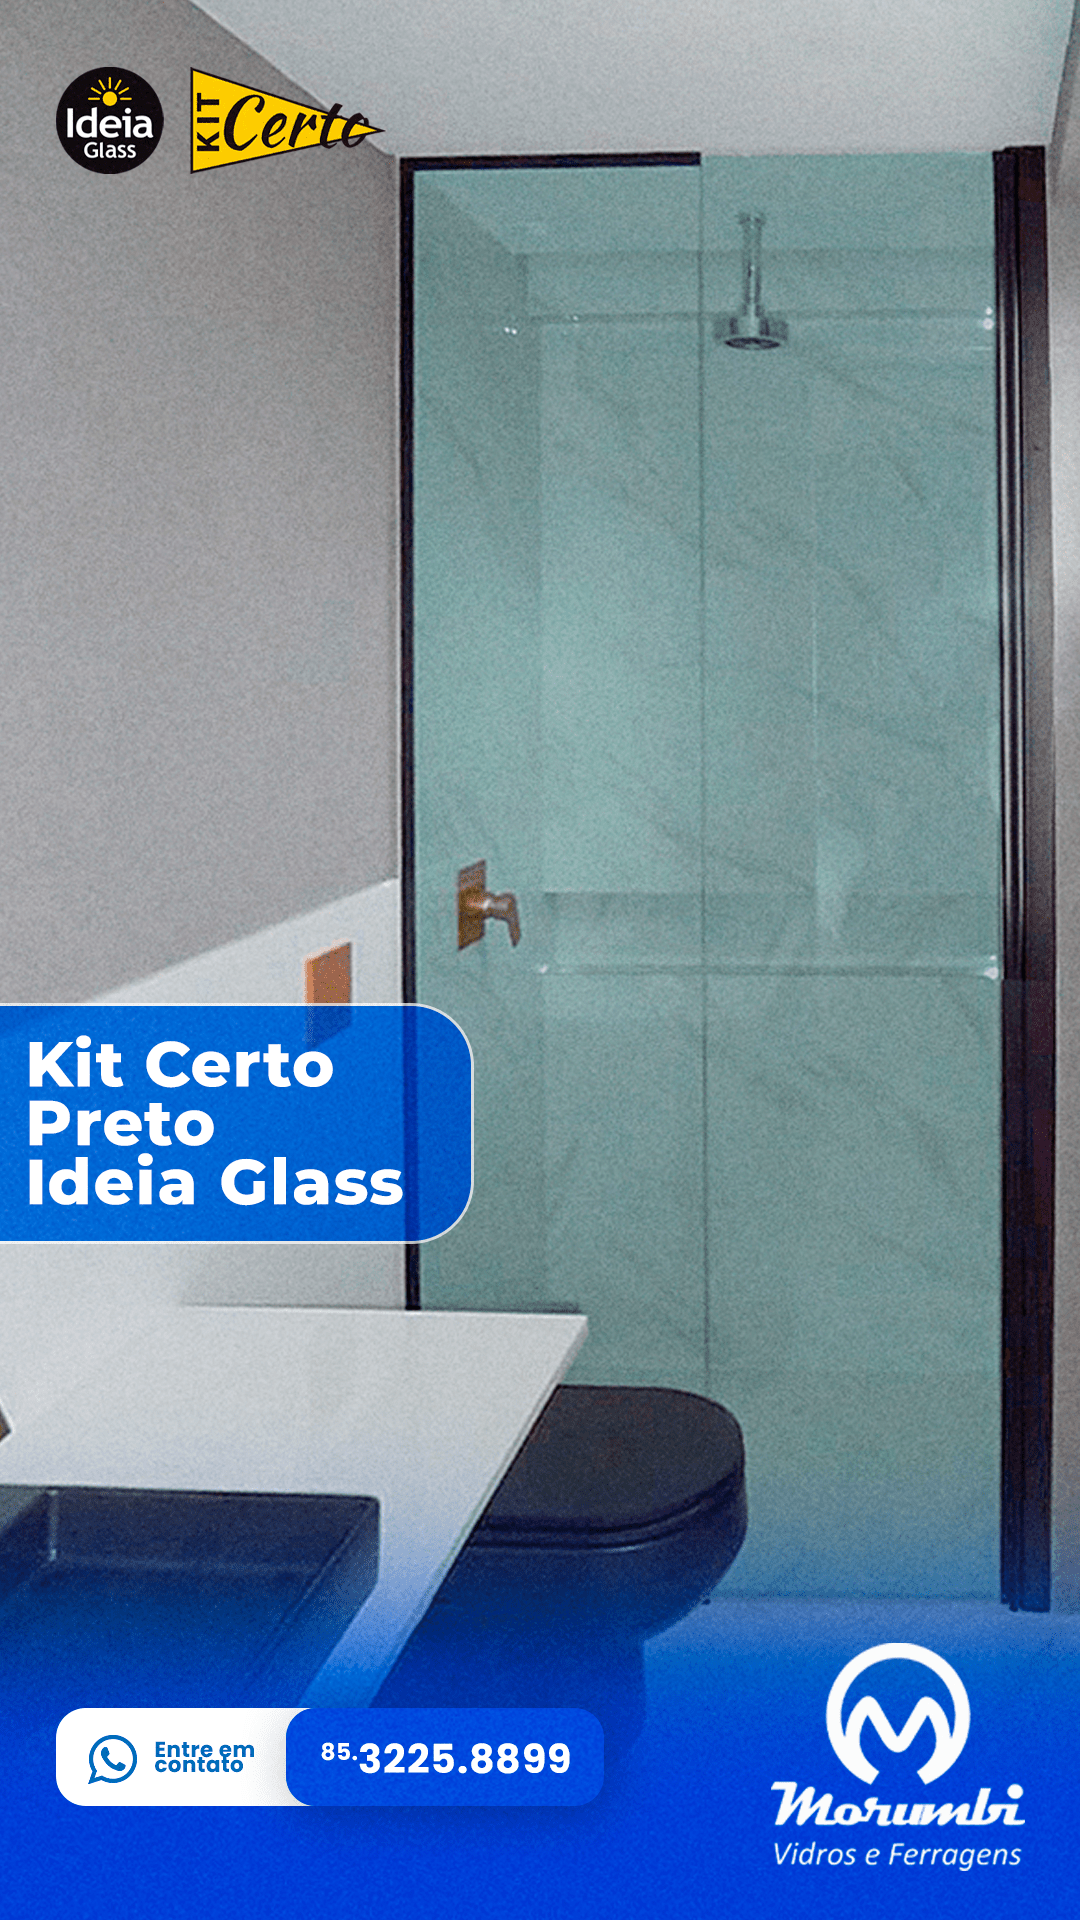 BOX CERTO - IDEIA GLASS - MORUMBI VIDROS E FERRAGENS